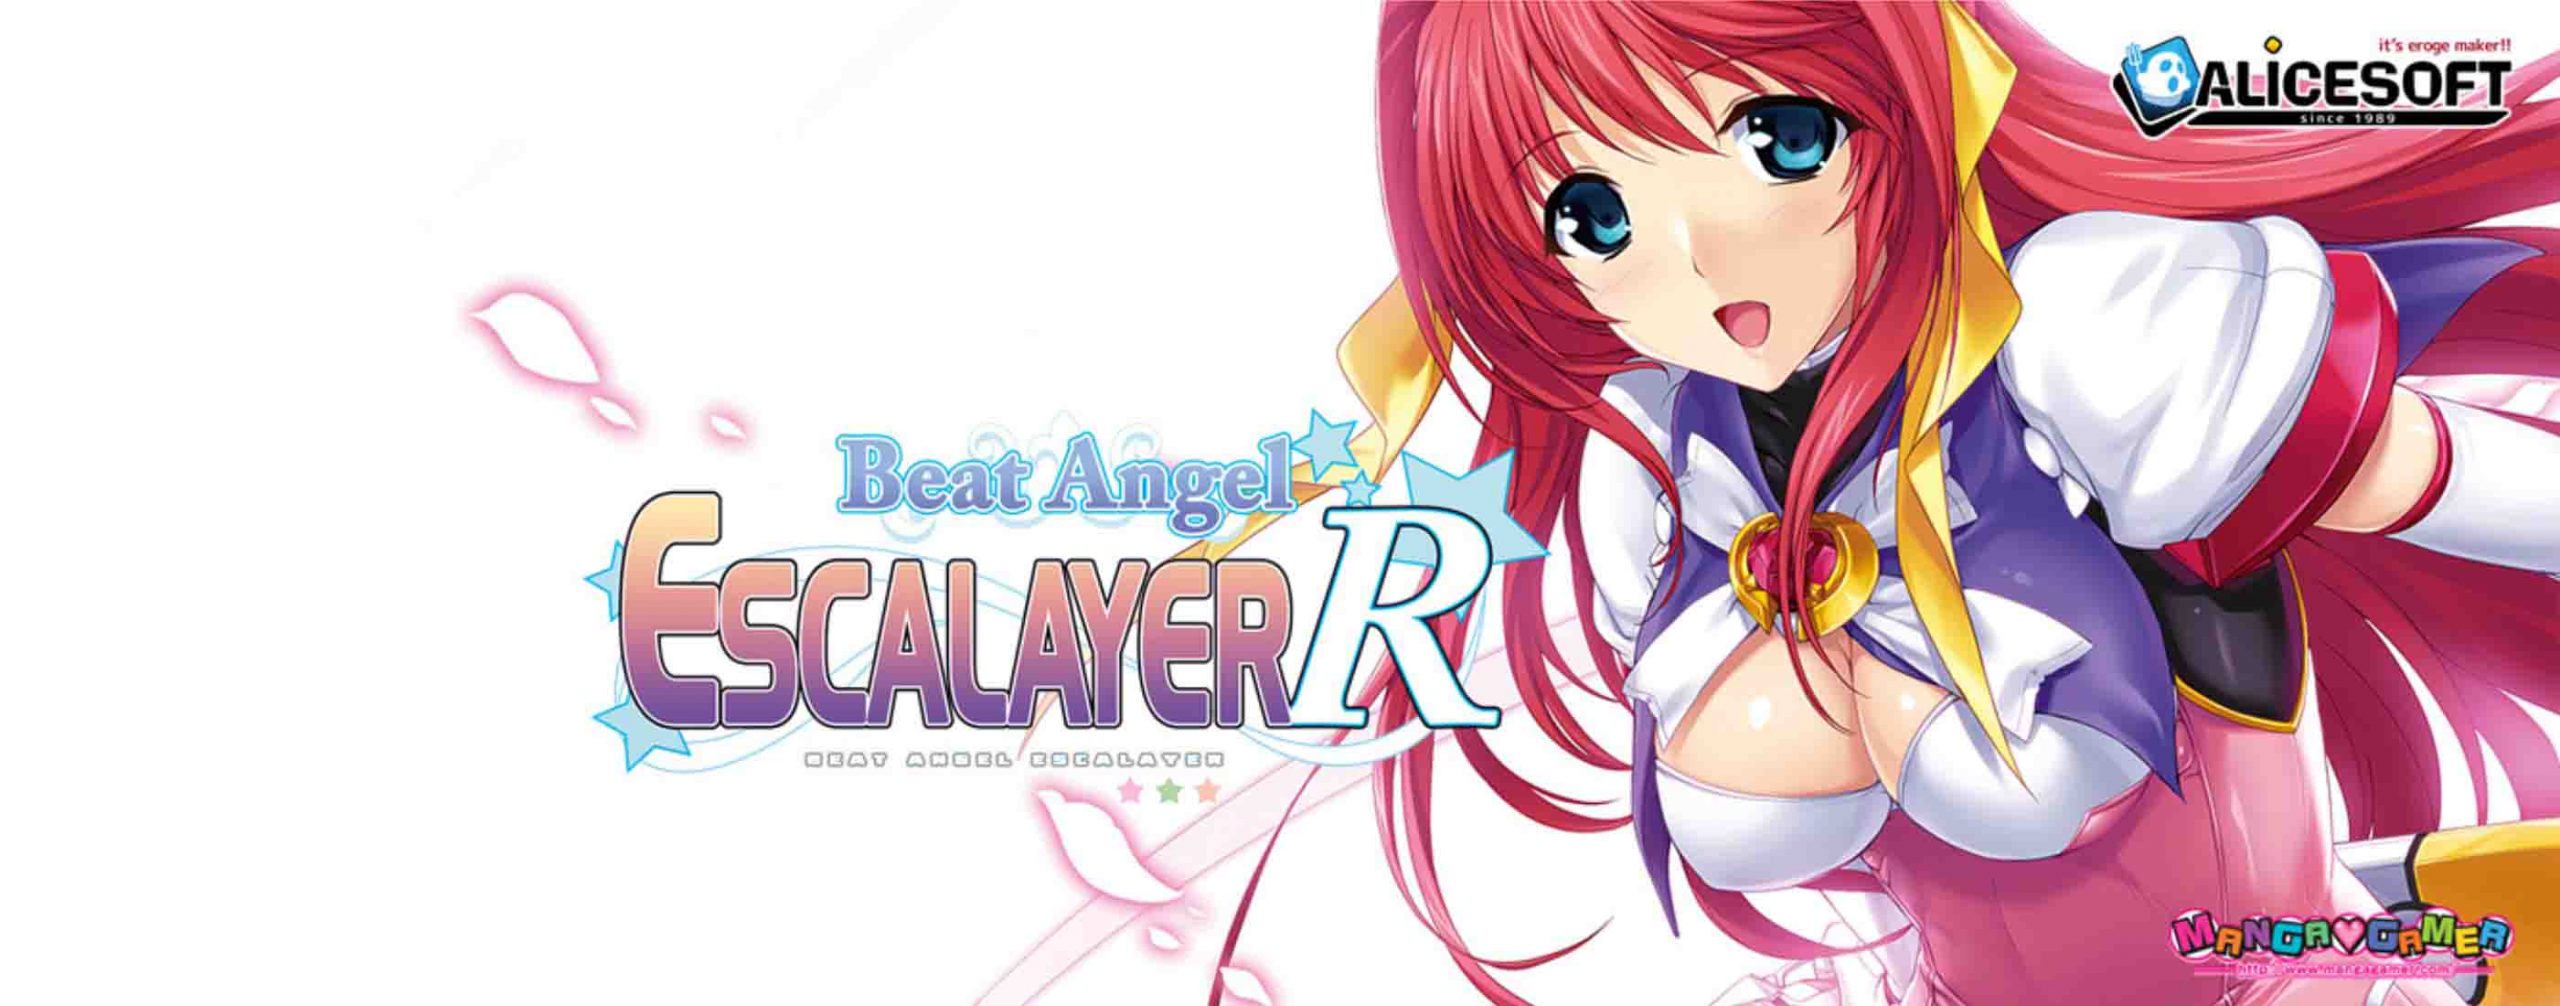 Beat Angel Escalayer R Final Version Download